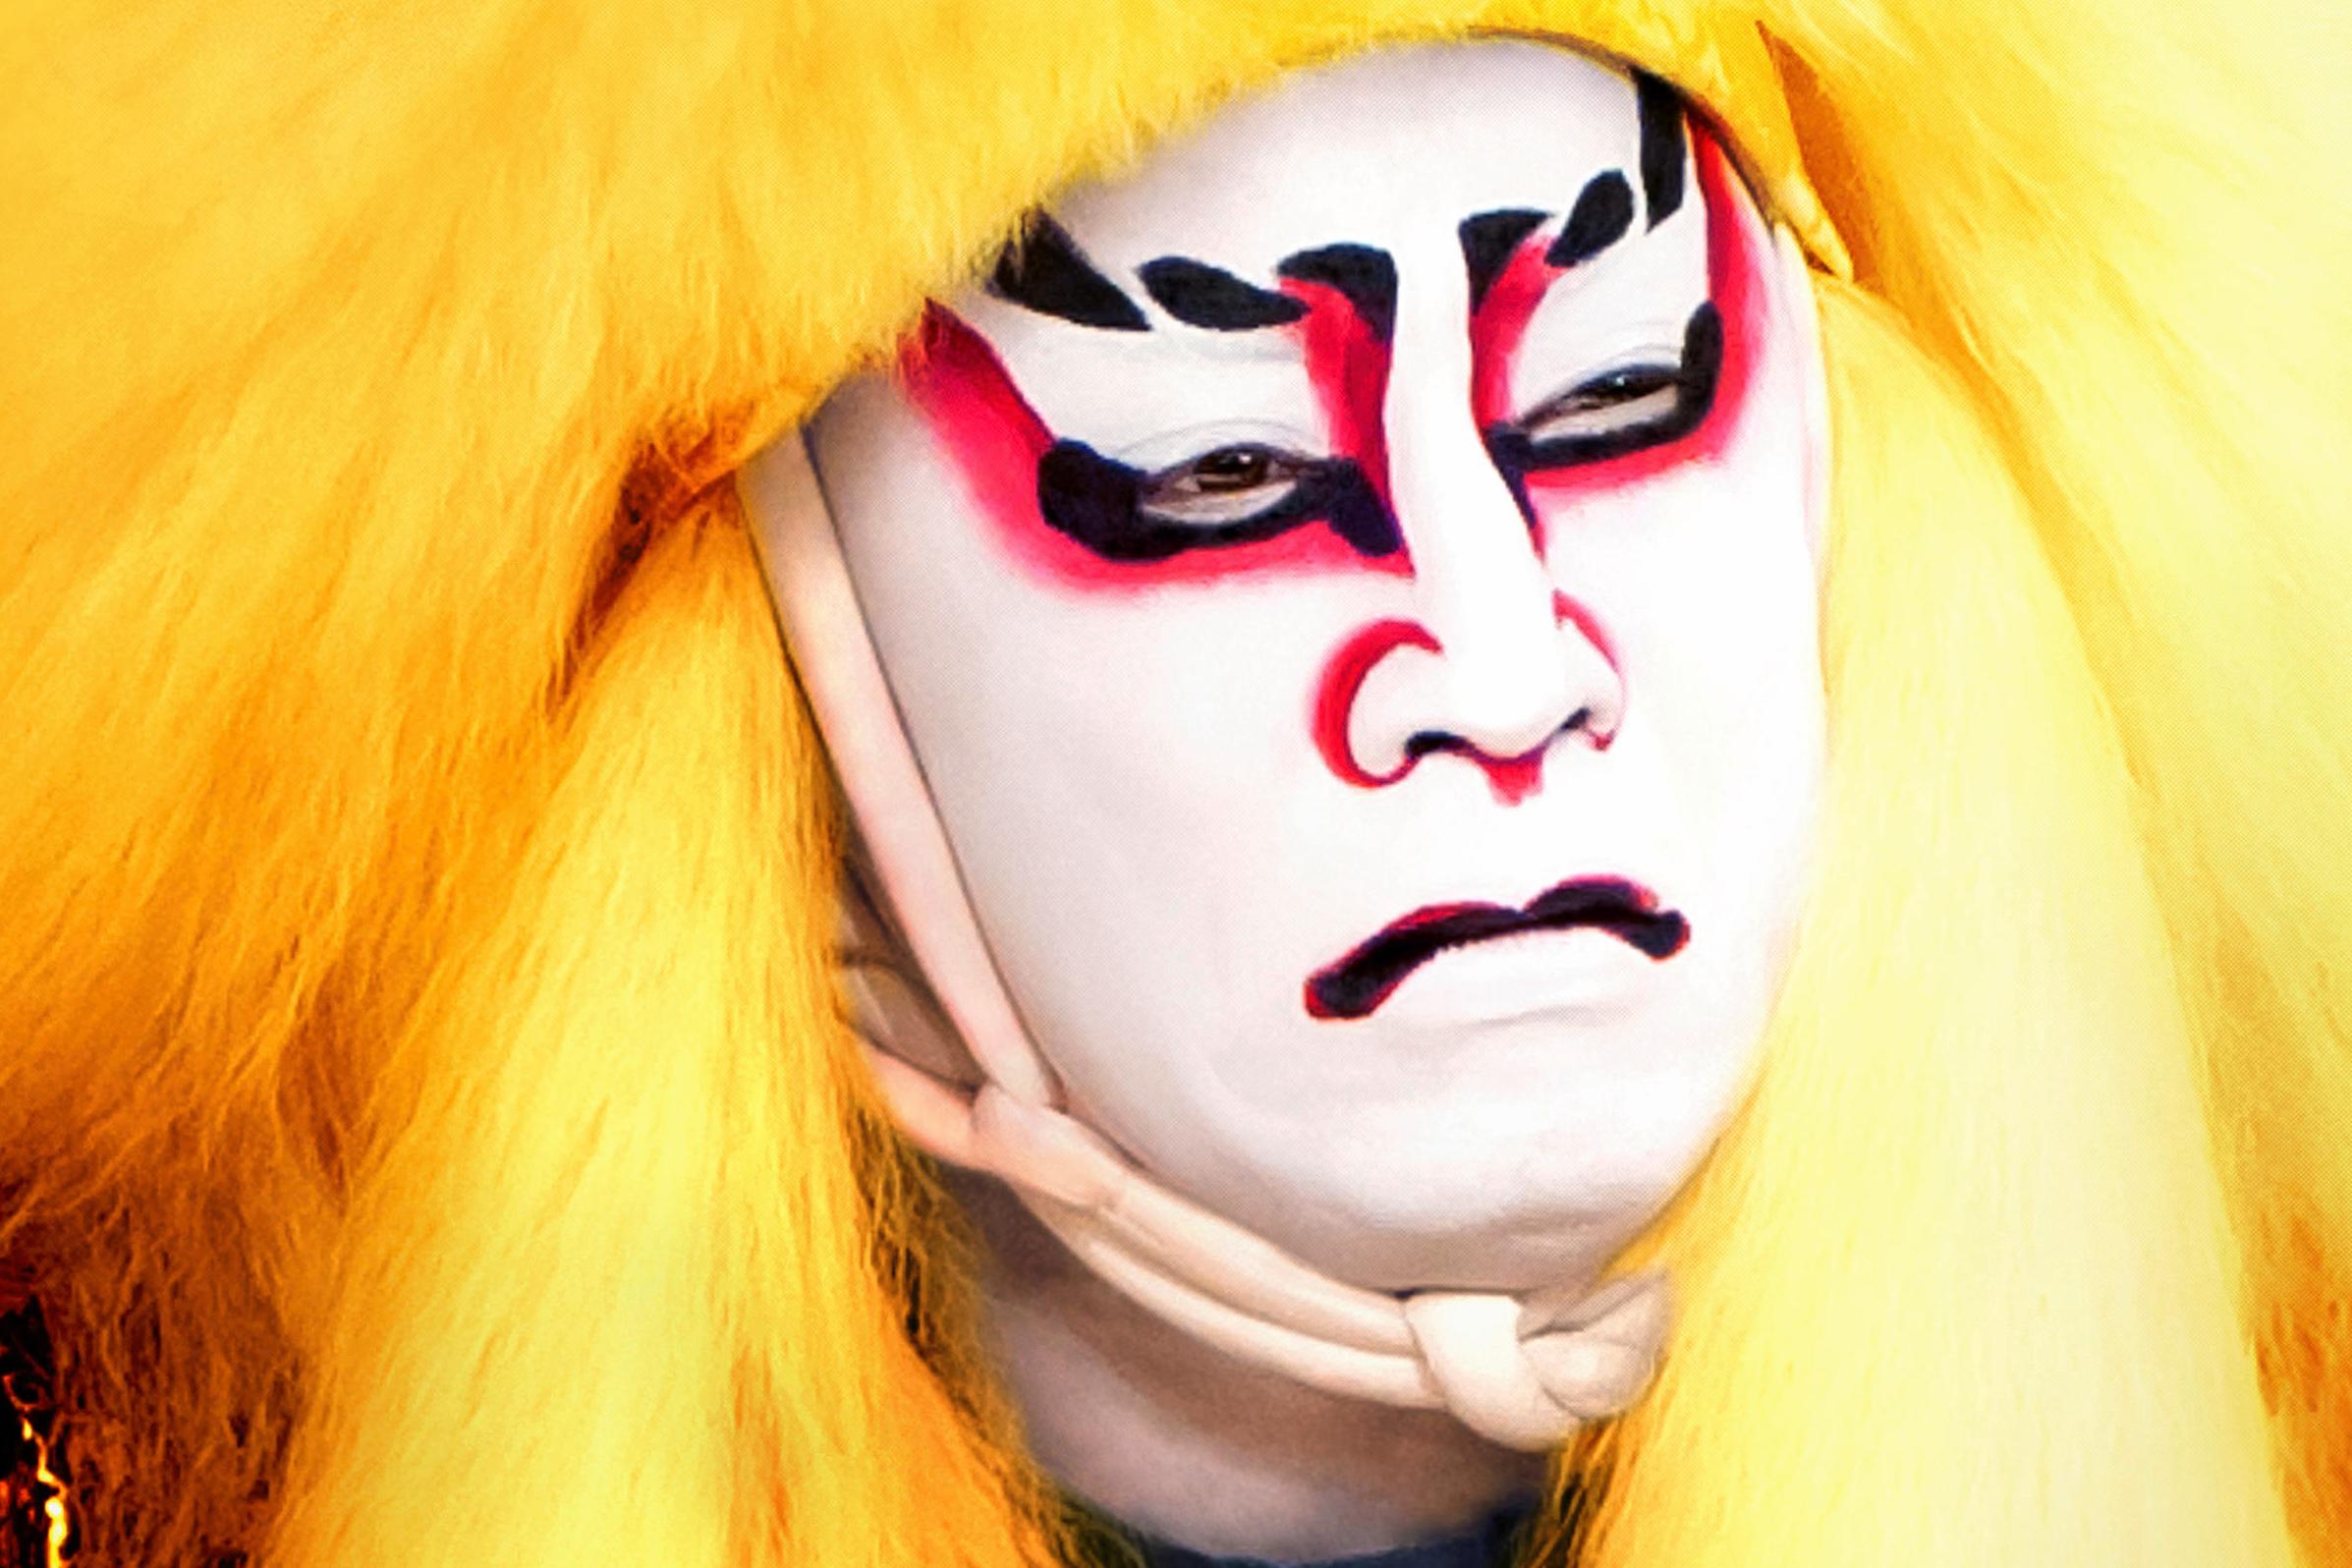 mgm-grand-2016-events-kabuki-lion-admat-no-text-2880x1800.jpg.image_.260.169.high_.jpg